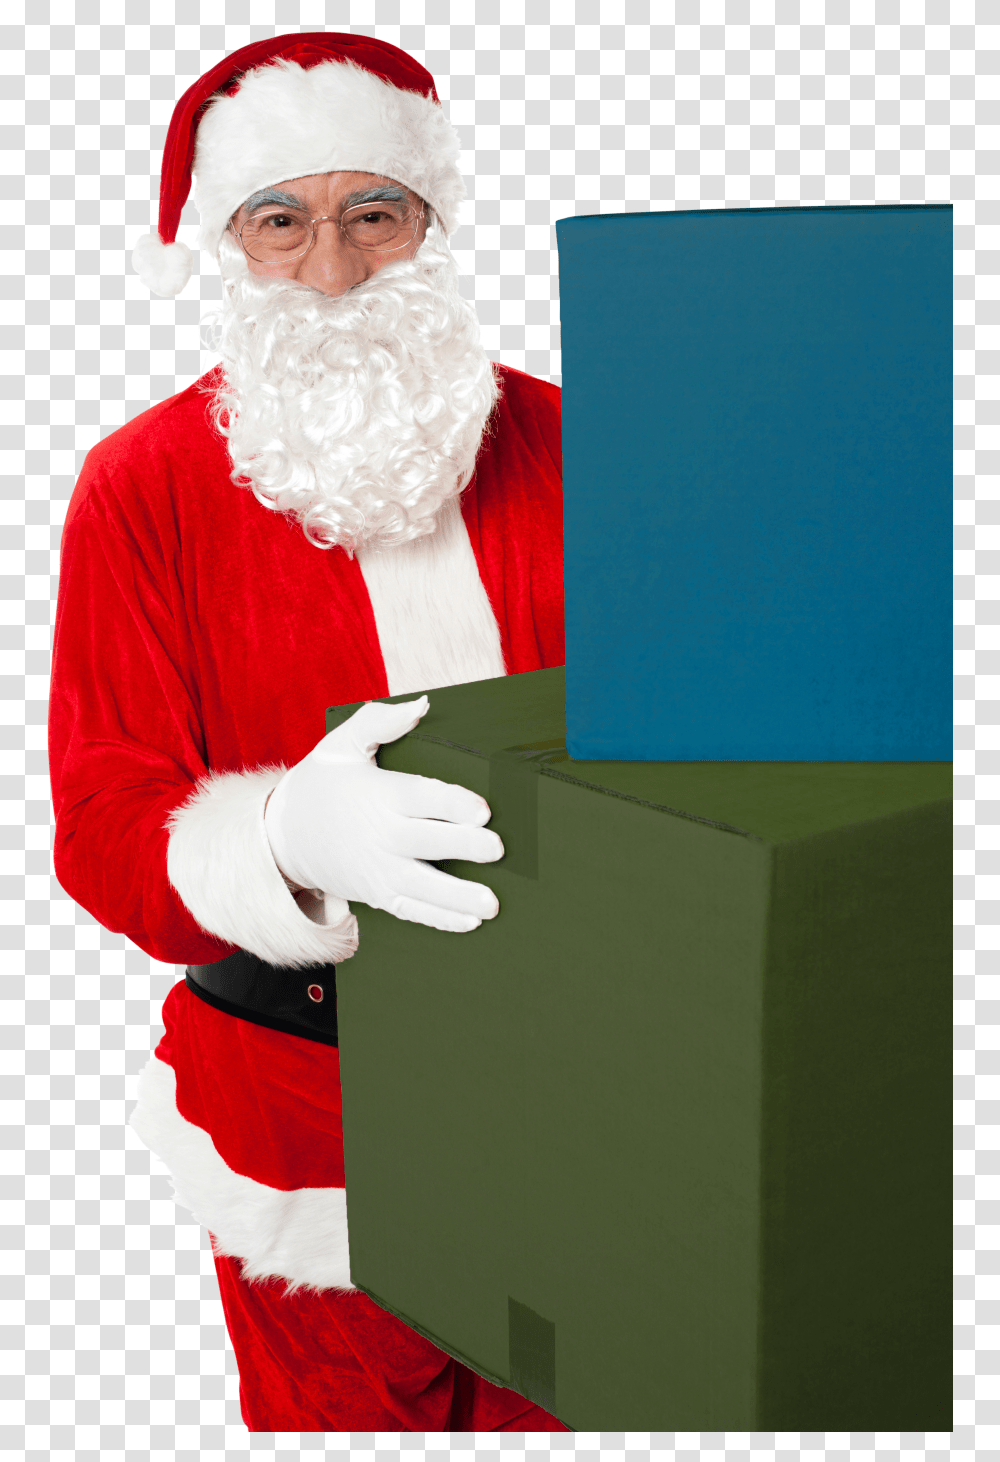 Santa Claus Holding Boxes Image Santa Claus, Face, Person, Human, Performer Transparent Png